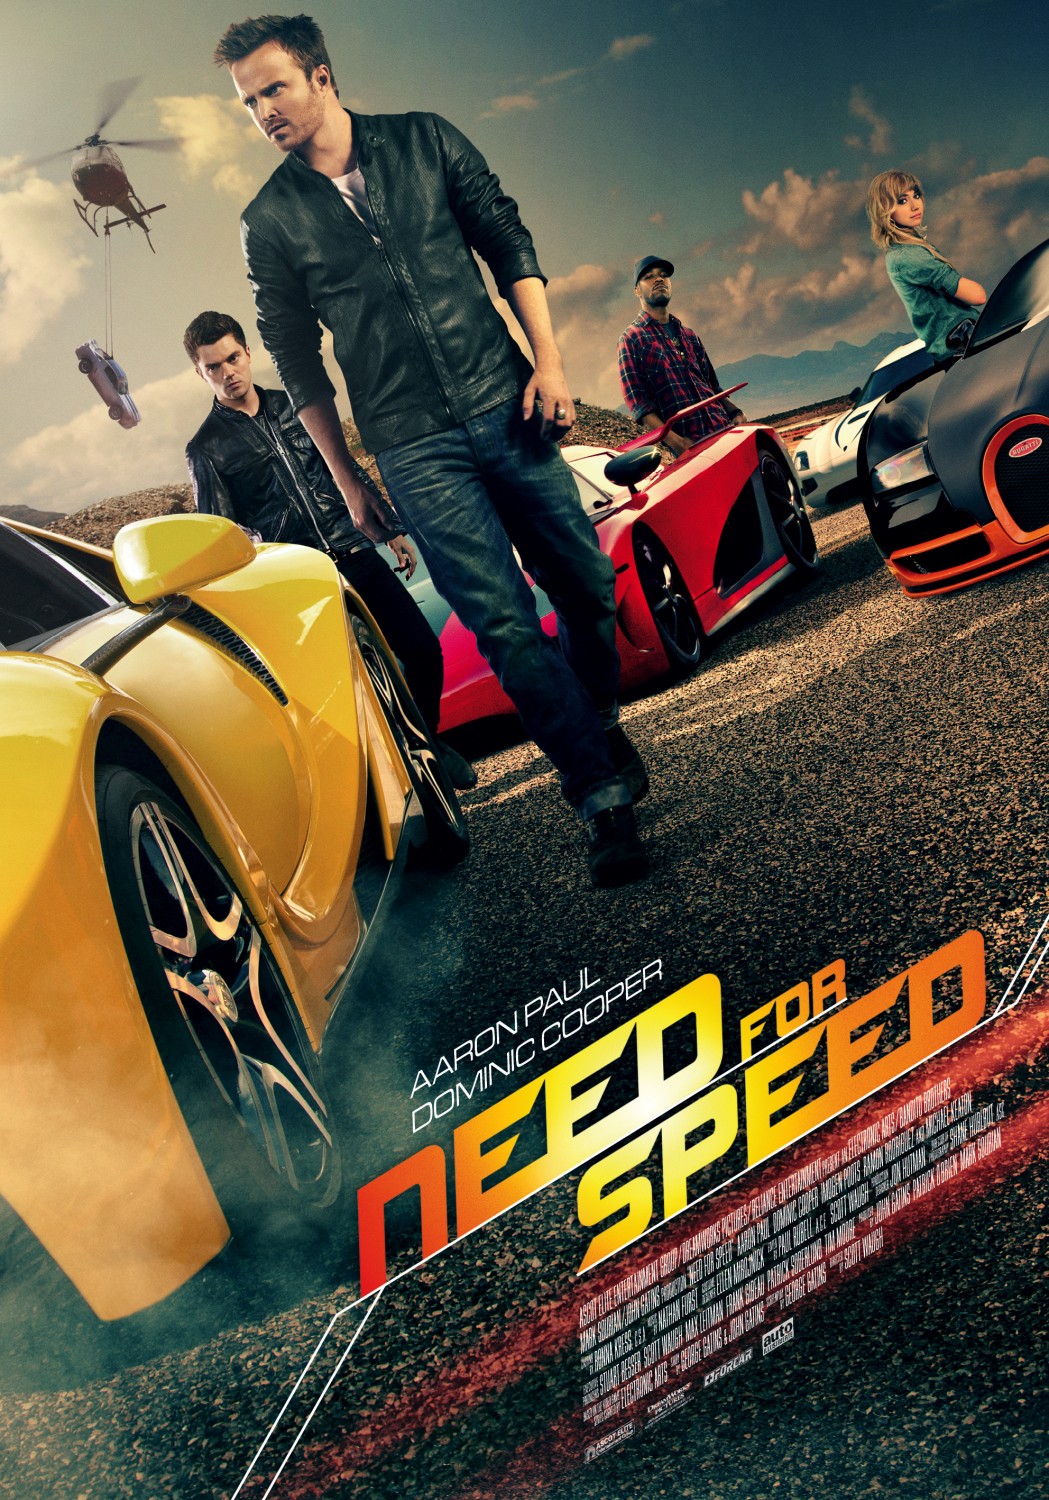 speed 3 movie